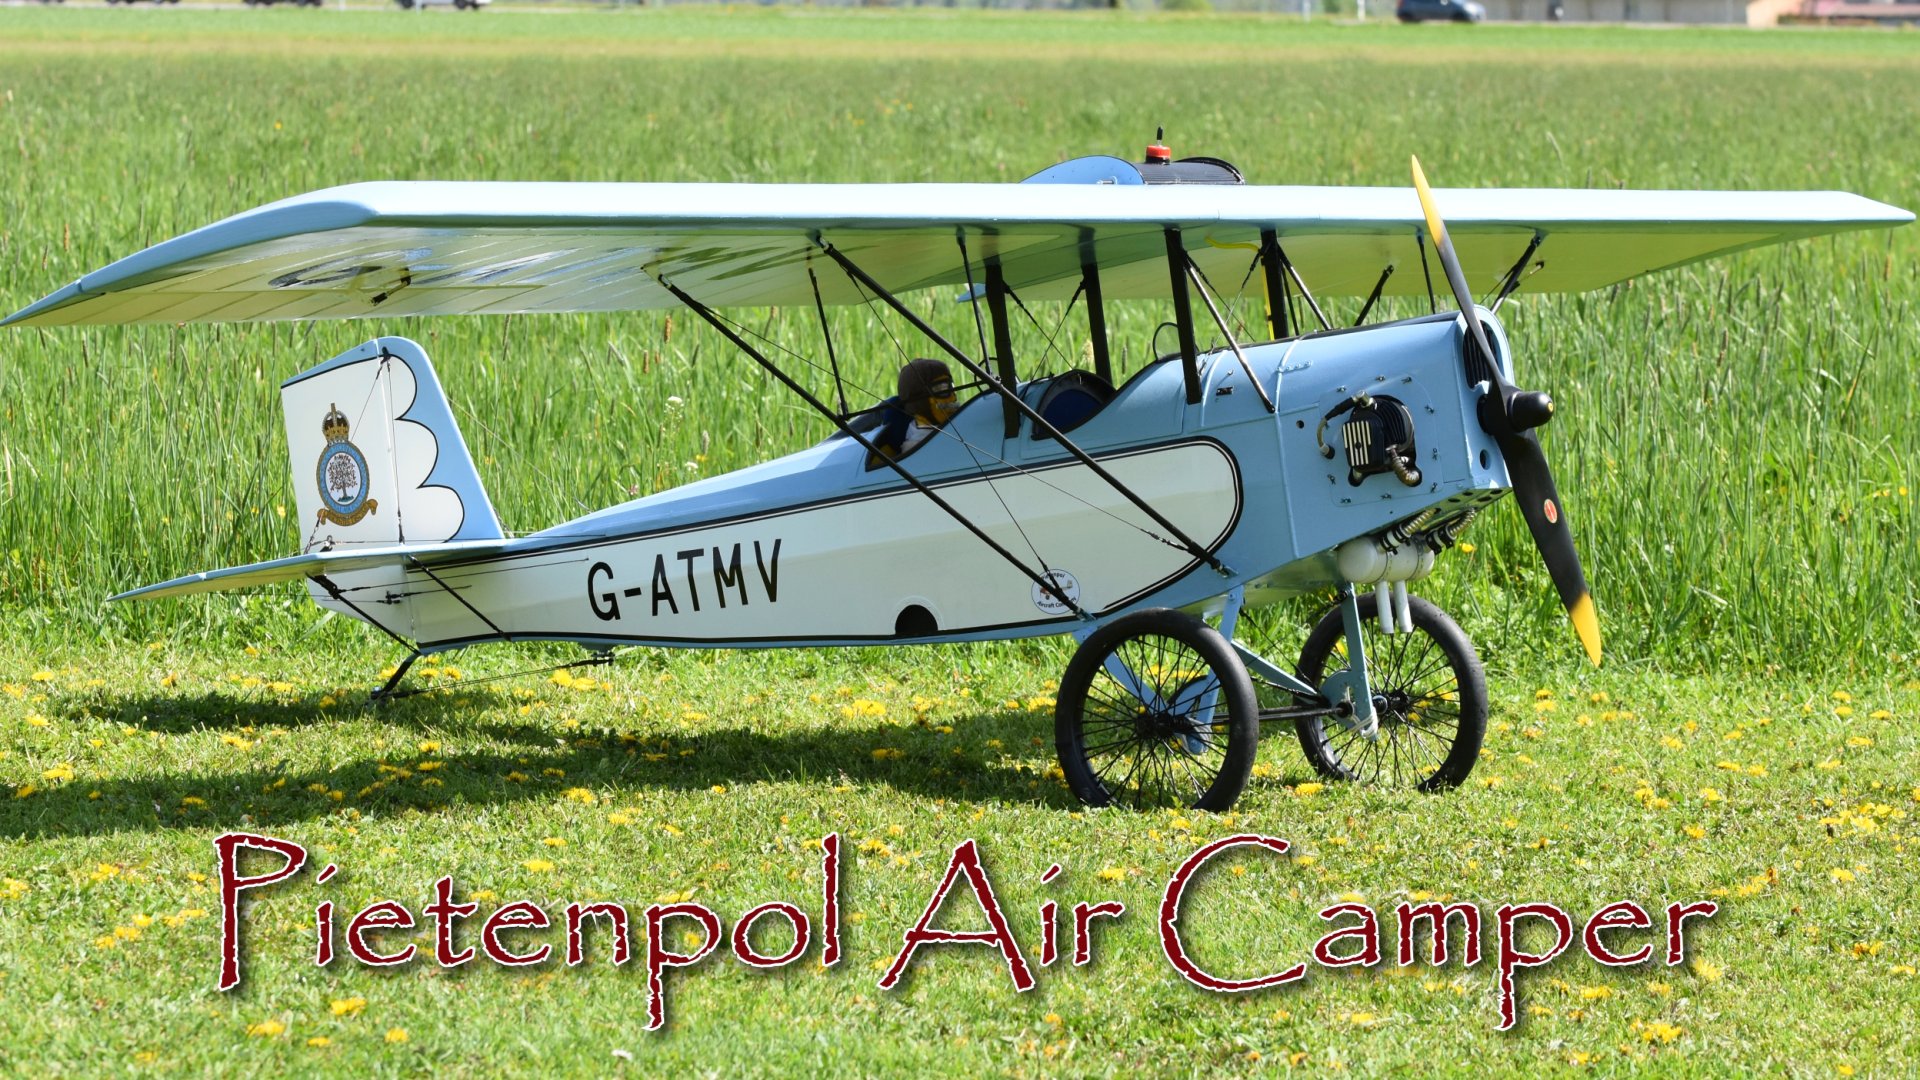 Pietenpol Air Camper Titel 2.jpg